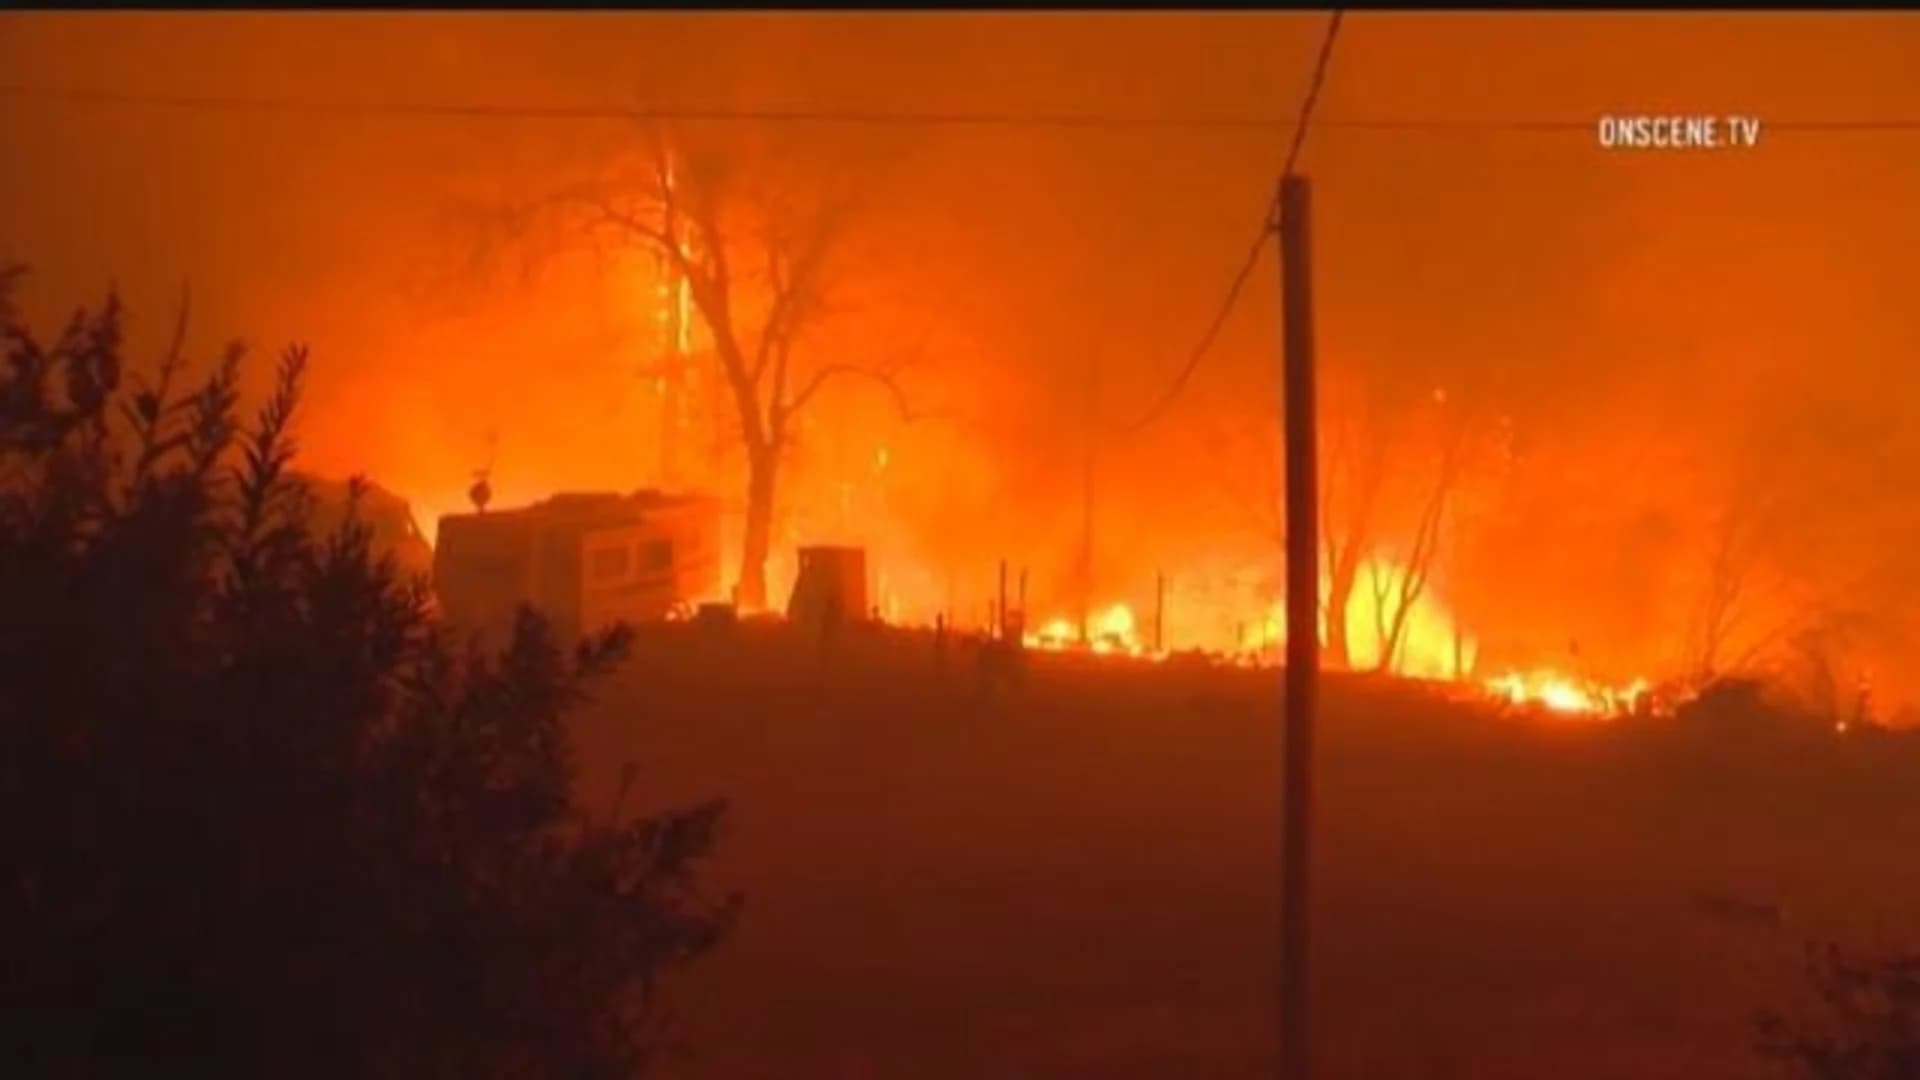 Amid raging fire, Red Cross volunteers head West to help